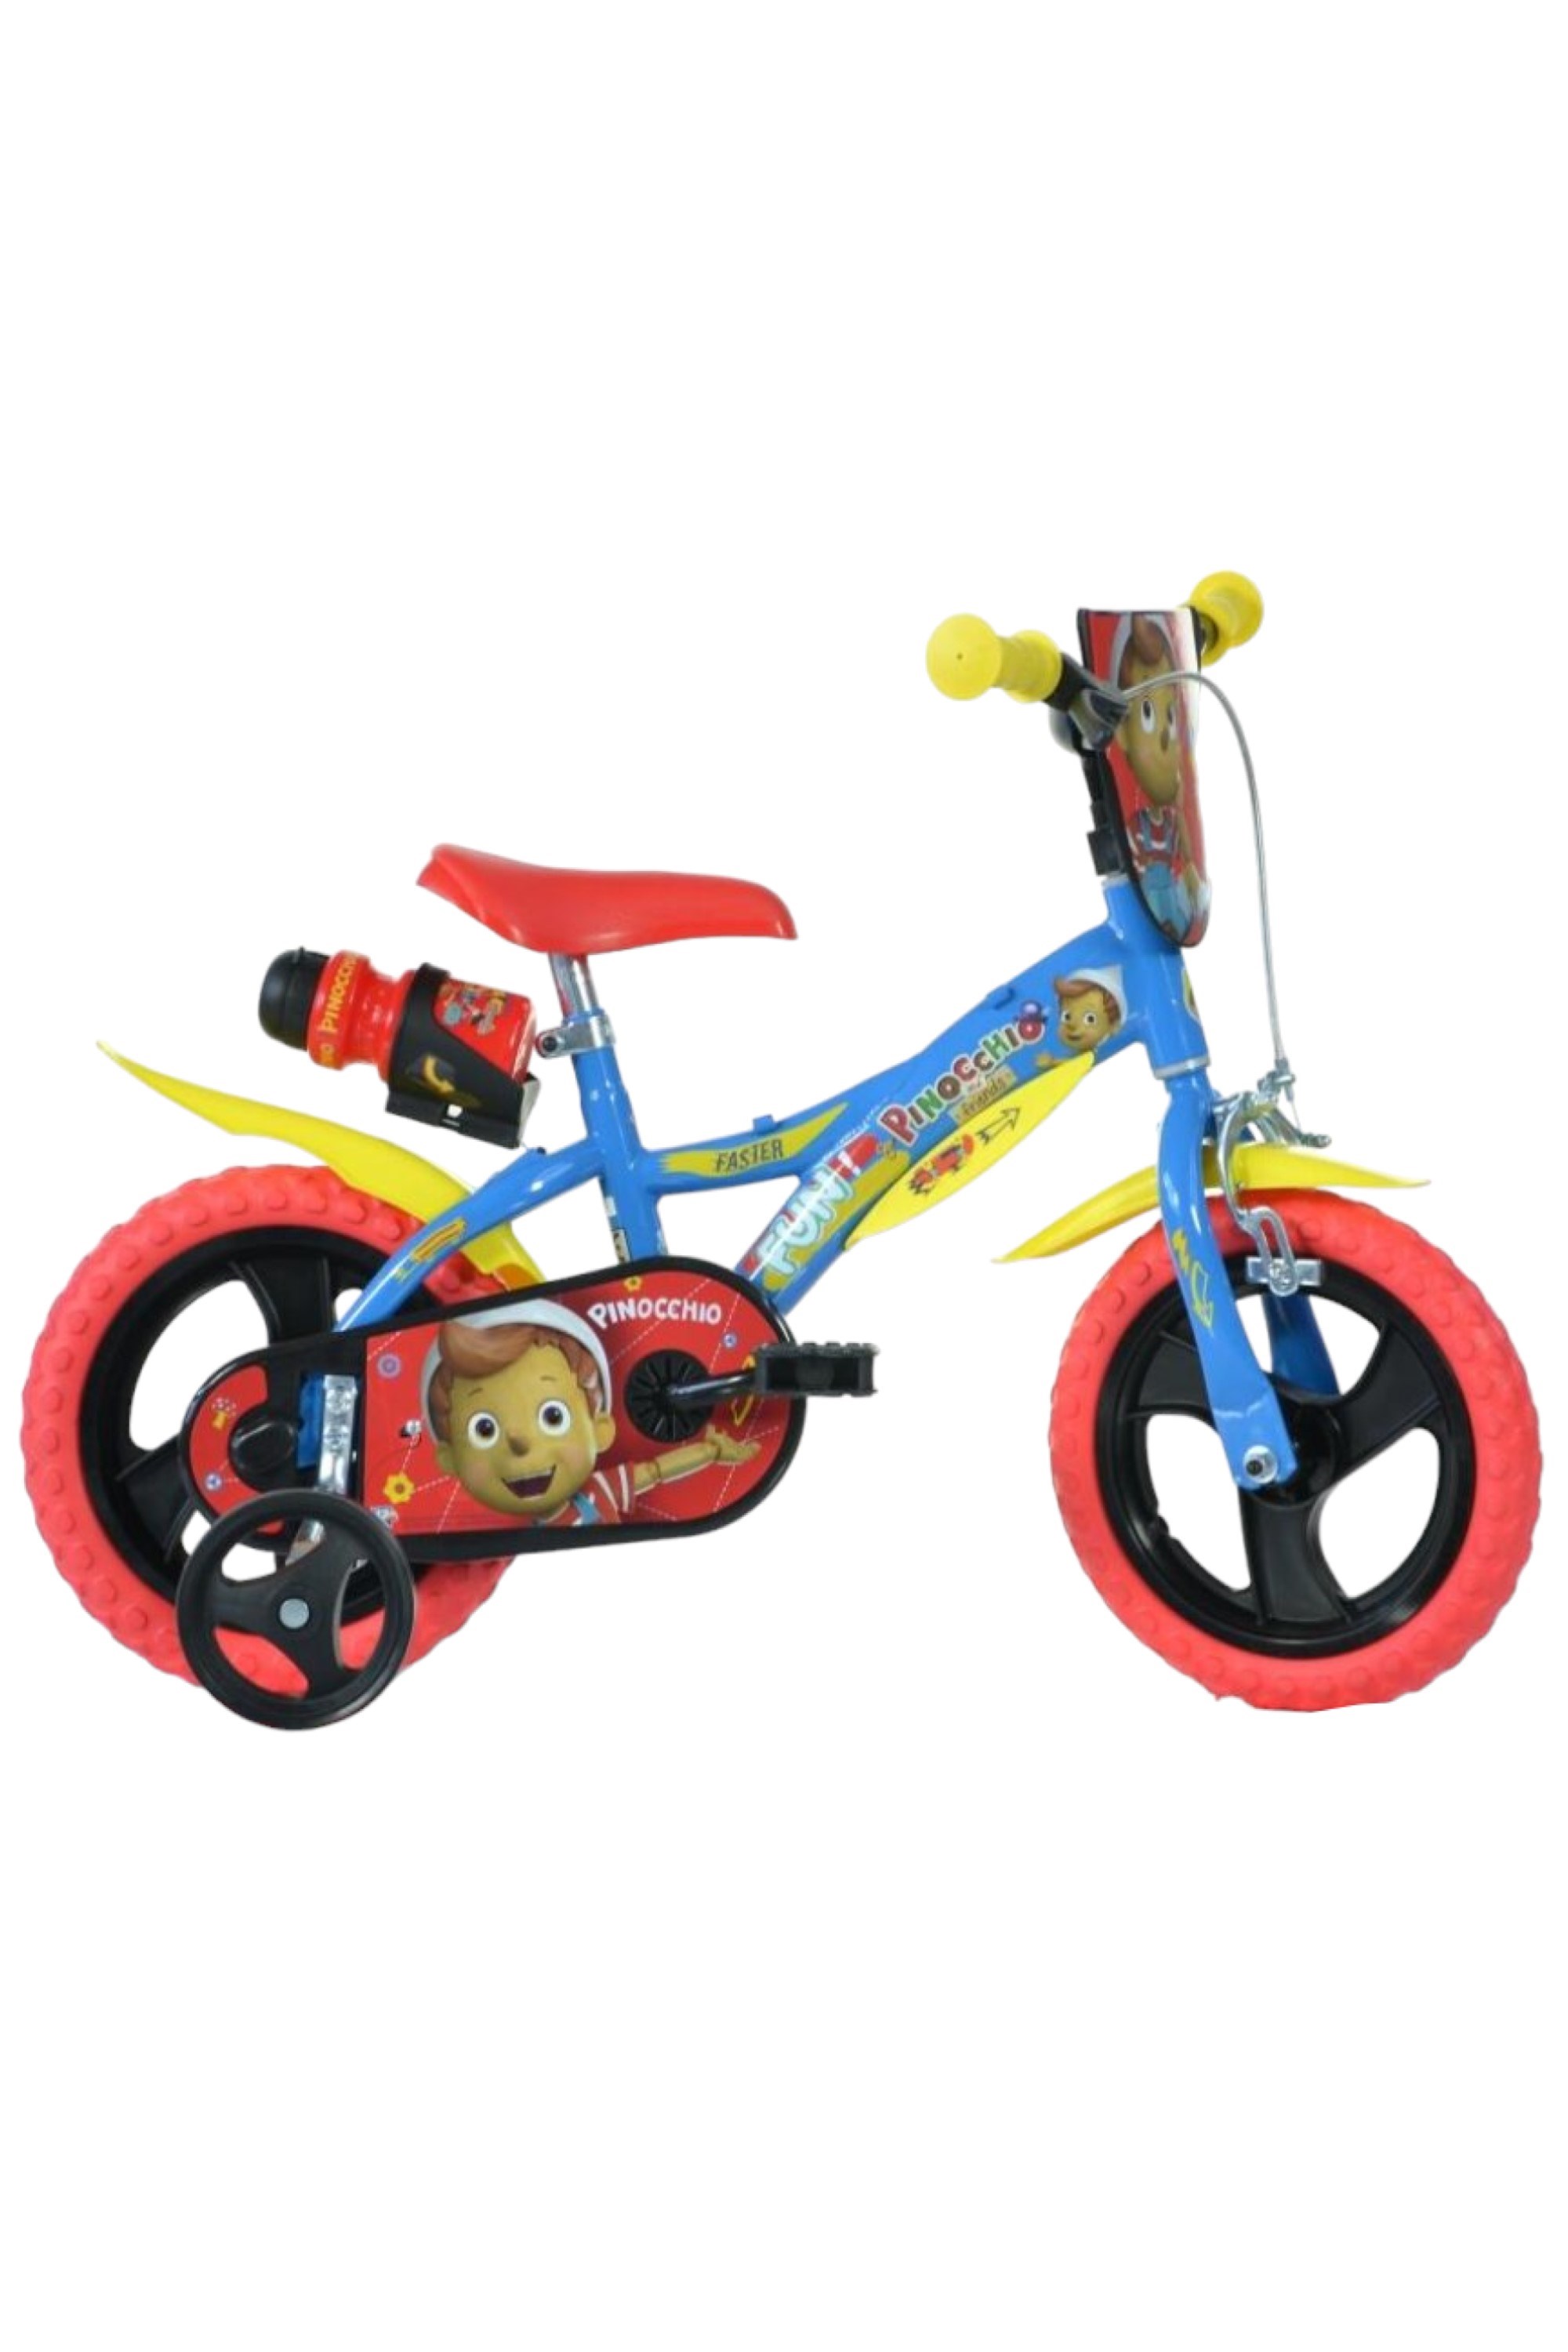 Pinocchio 12" Kids Bike -